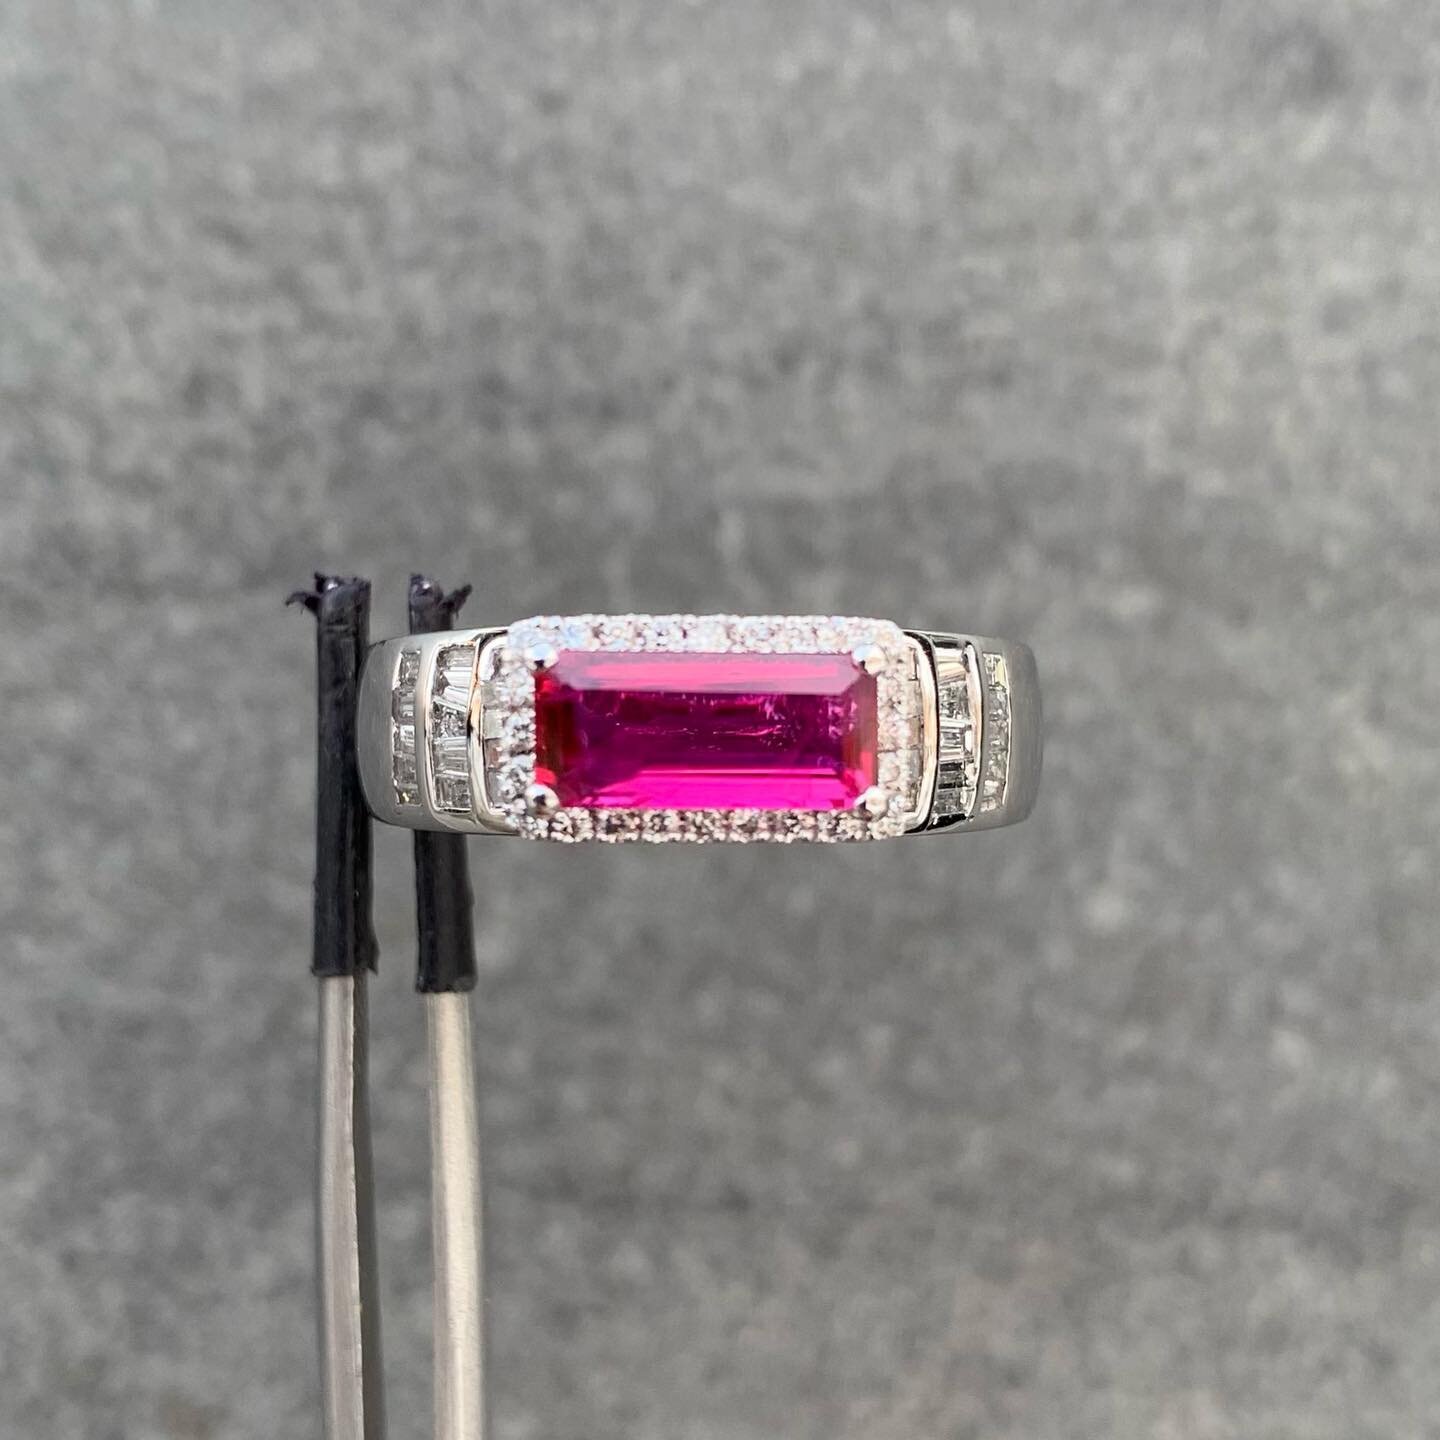 Unfiltered Diamond Ruby Ring Remake. The original ring was from 20 years ago. #beyourowndesigner
Swipe ➡️ to 🔎 the before pics.
&mdash;
🧞&zwj;♂️: @magnoliajewelers
&mdash;
𝐝𝐫𝐞𝐚𝐦 𝐢𝐭. 𝐰𝐞'𝐥𝐥 𝐦𝐚𝐤𝐞 𝐢𝐭.
&mdash;
#custom #custommade #custo